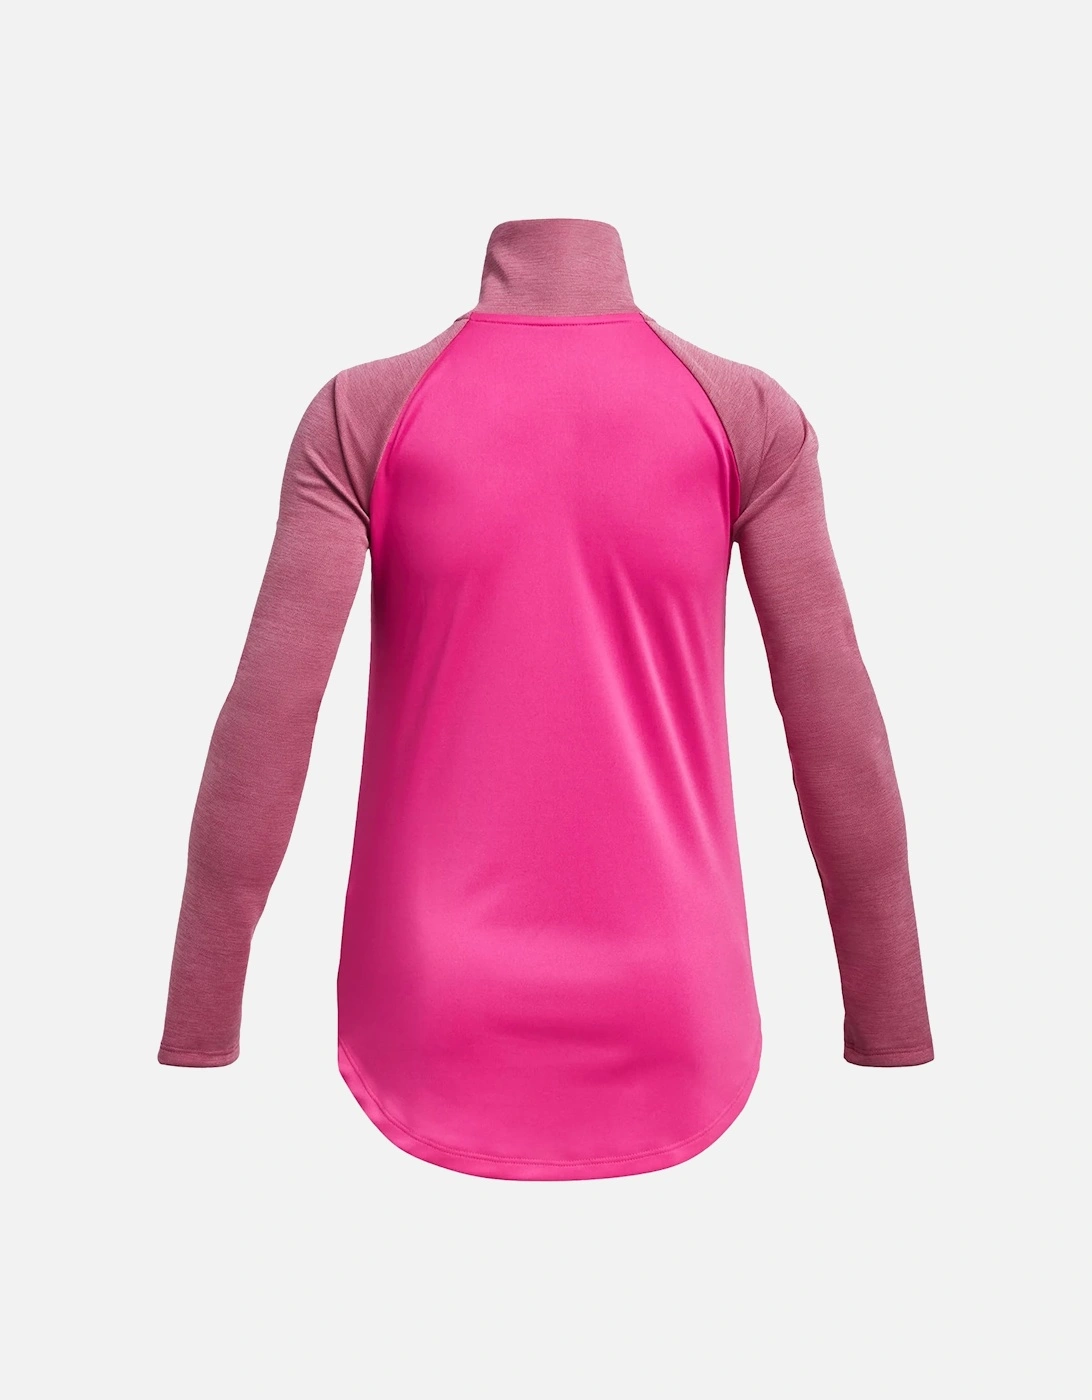 Youth Girls Tech Graphic Half Zip Sweatshirt (Pink)